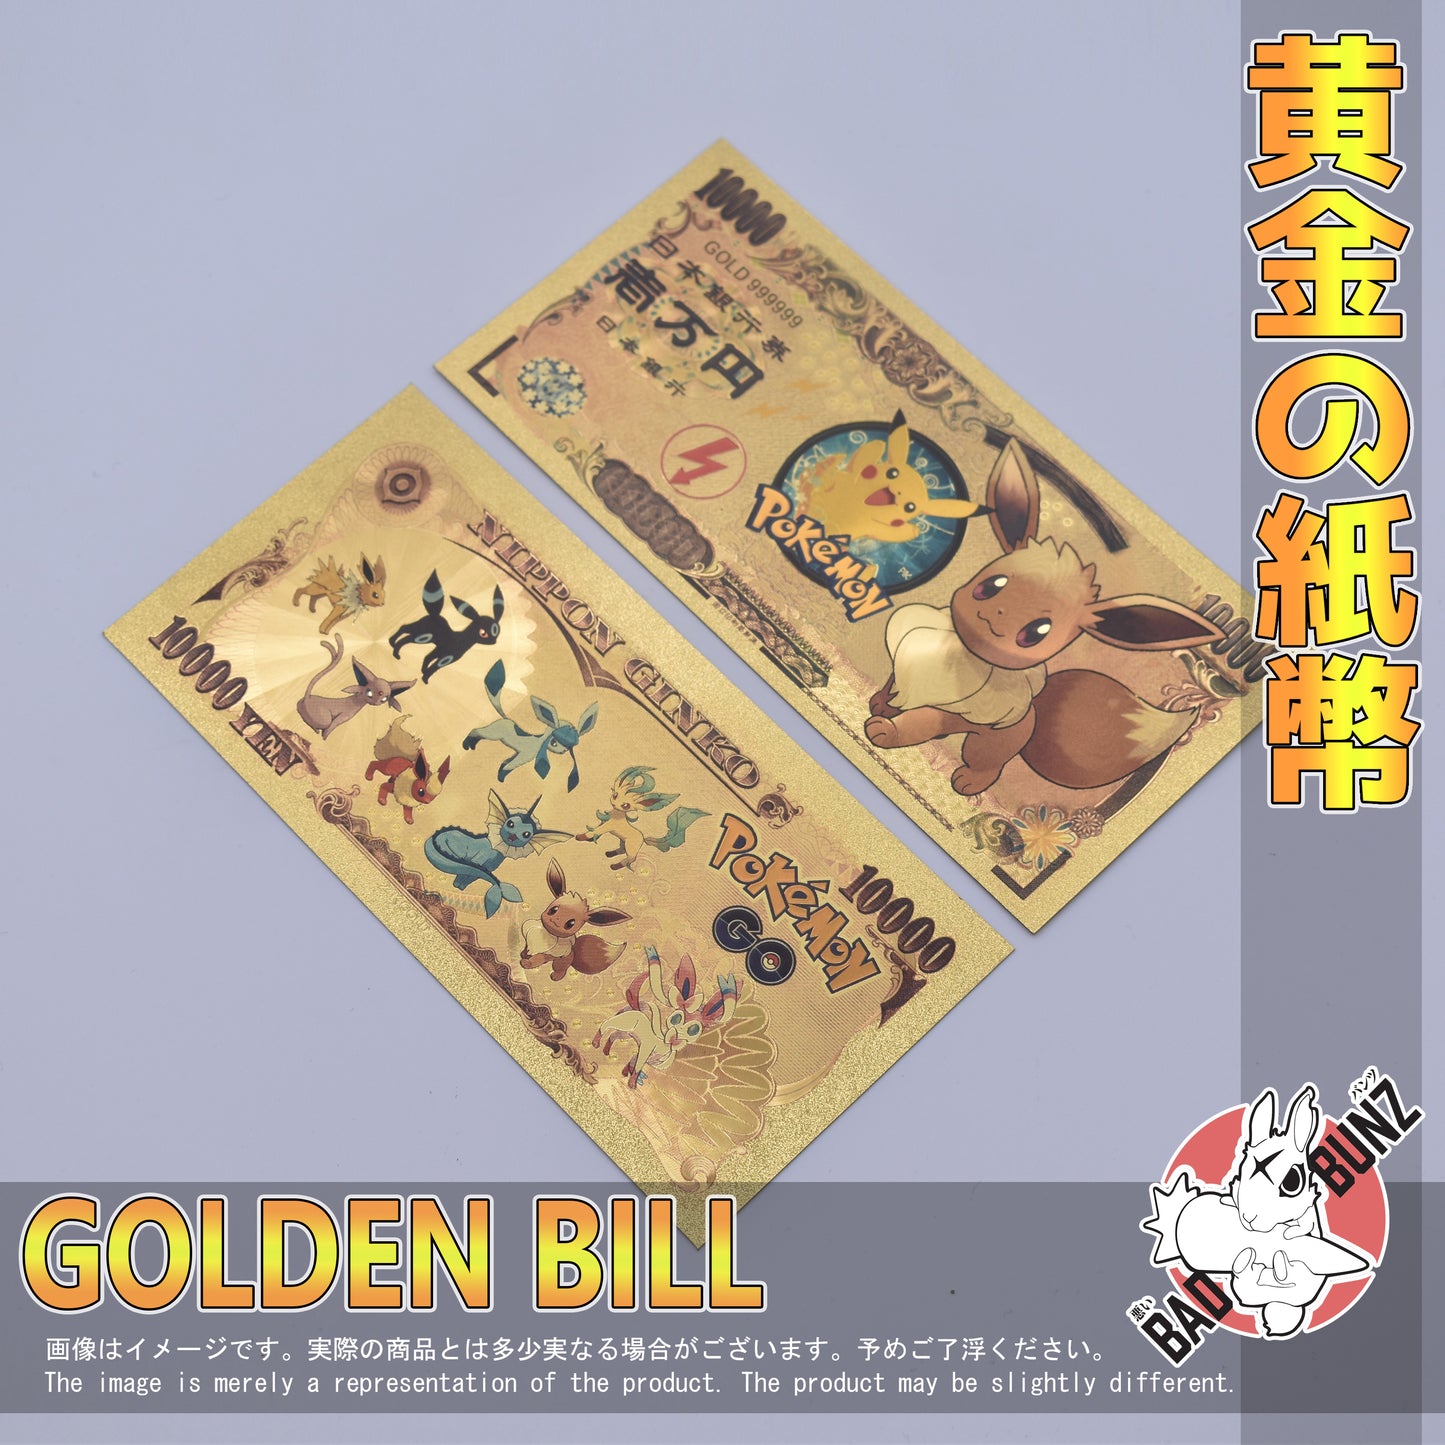 (PKM-01GBILL) EEVEE Pokemon Gaming Golden Japanese Yen Bill